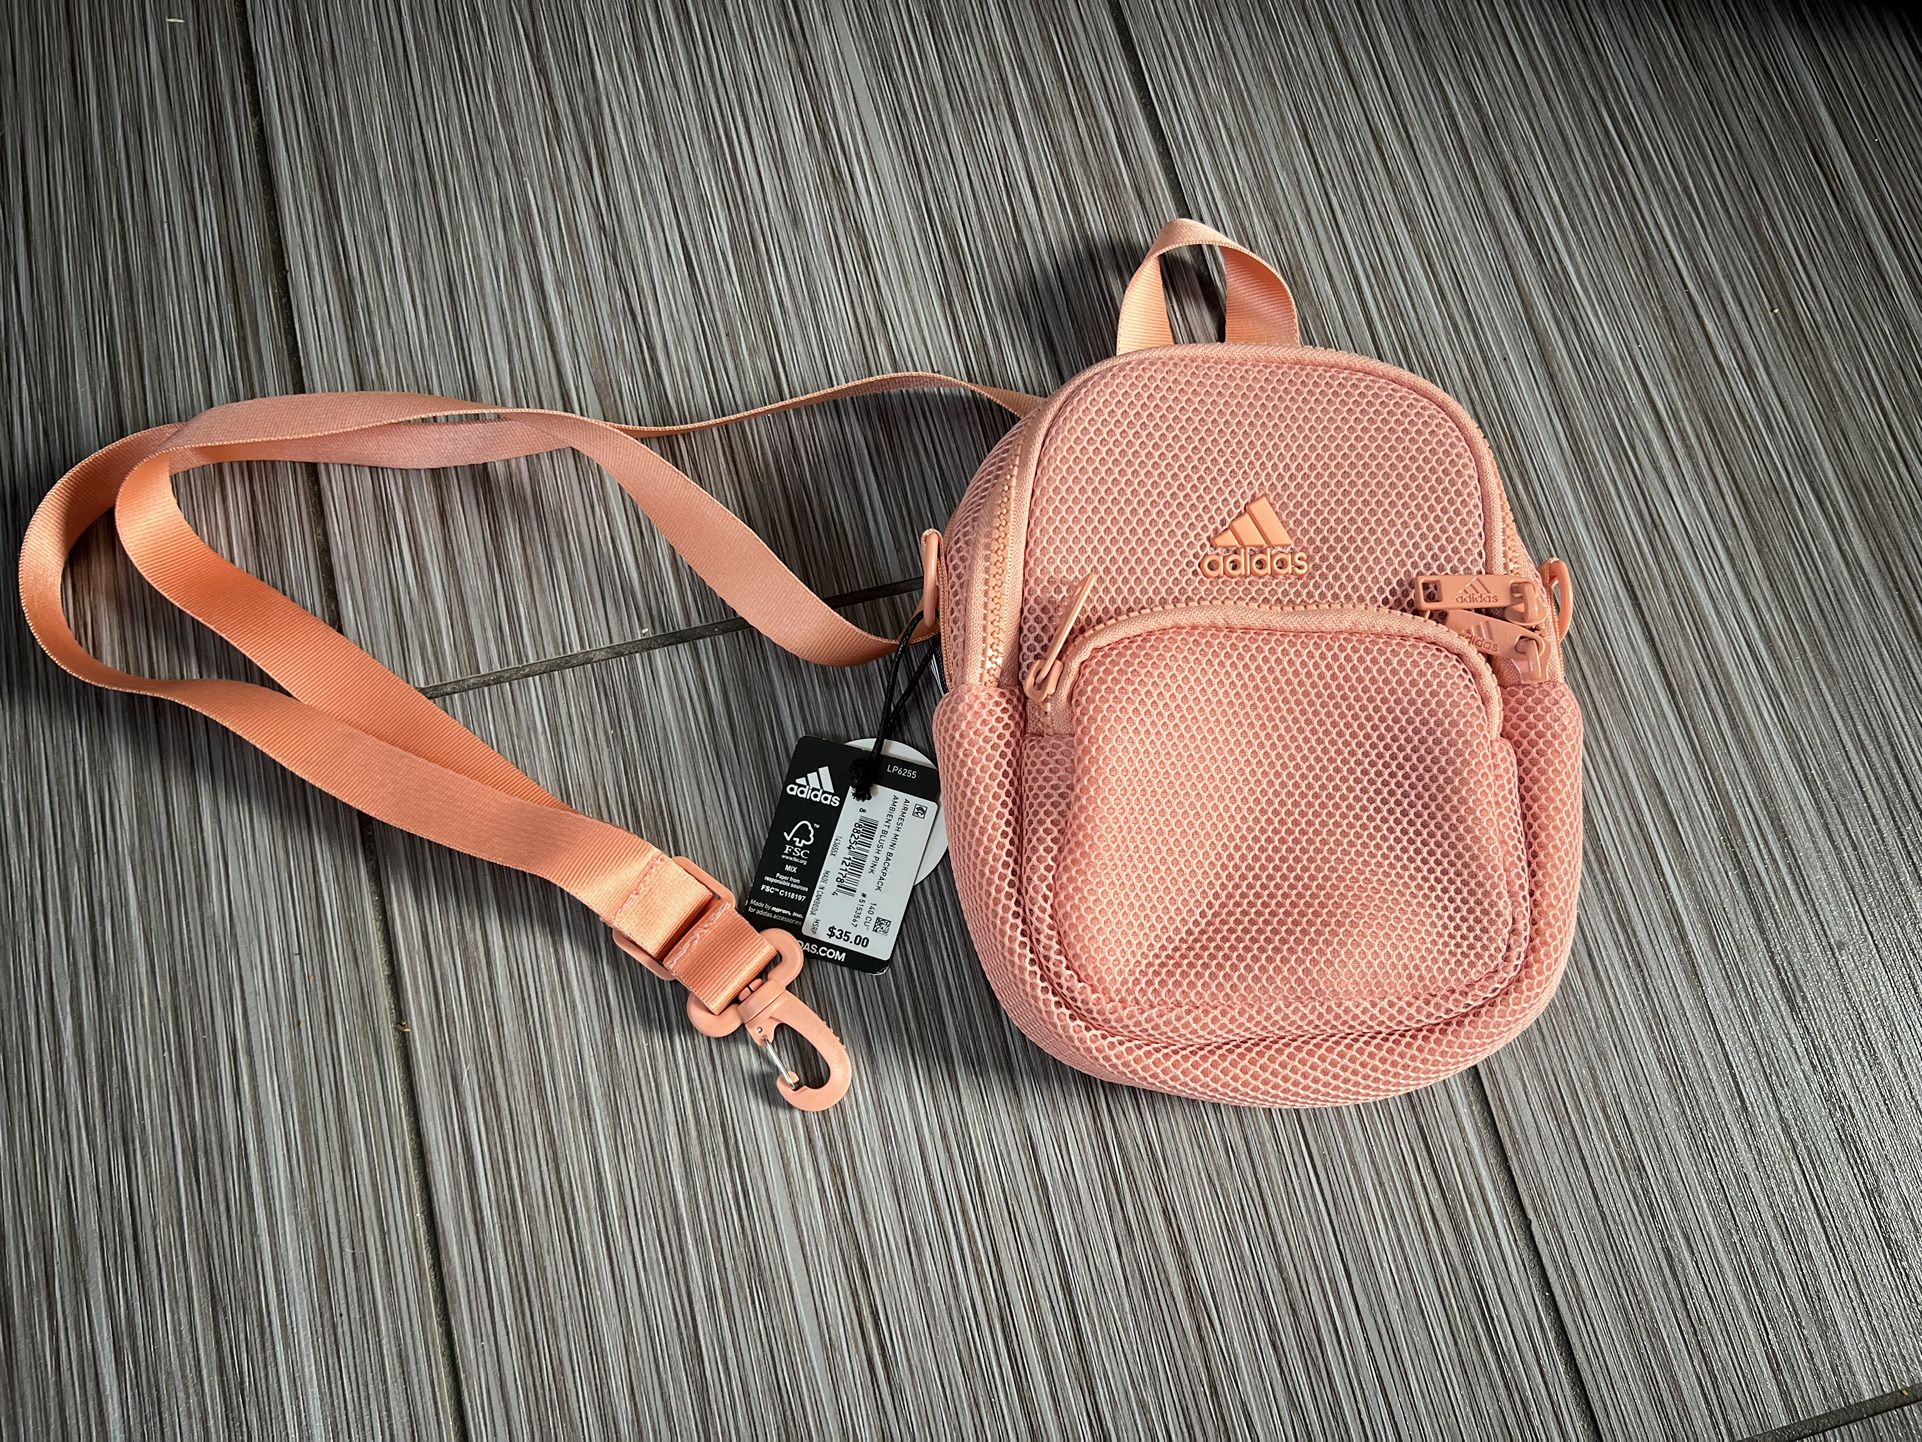 Adidas Mini Backpack Bag